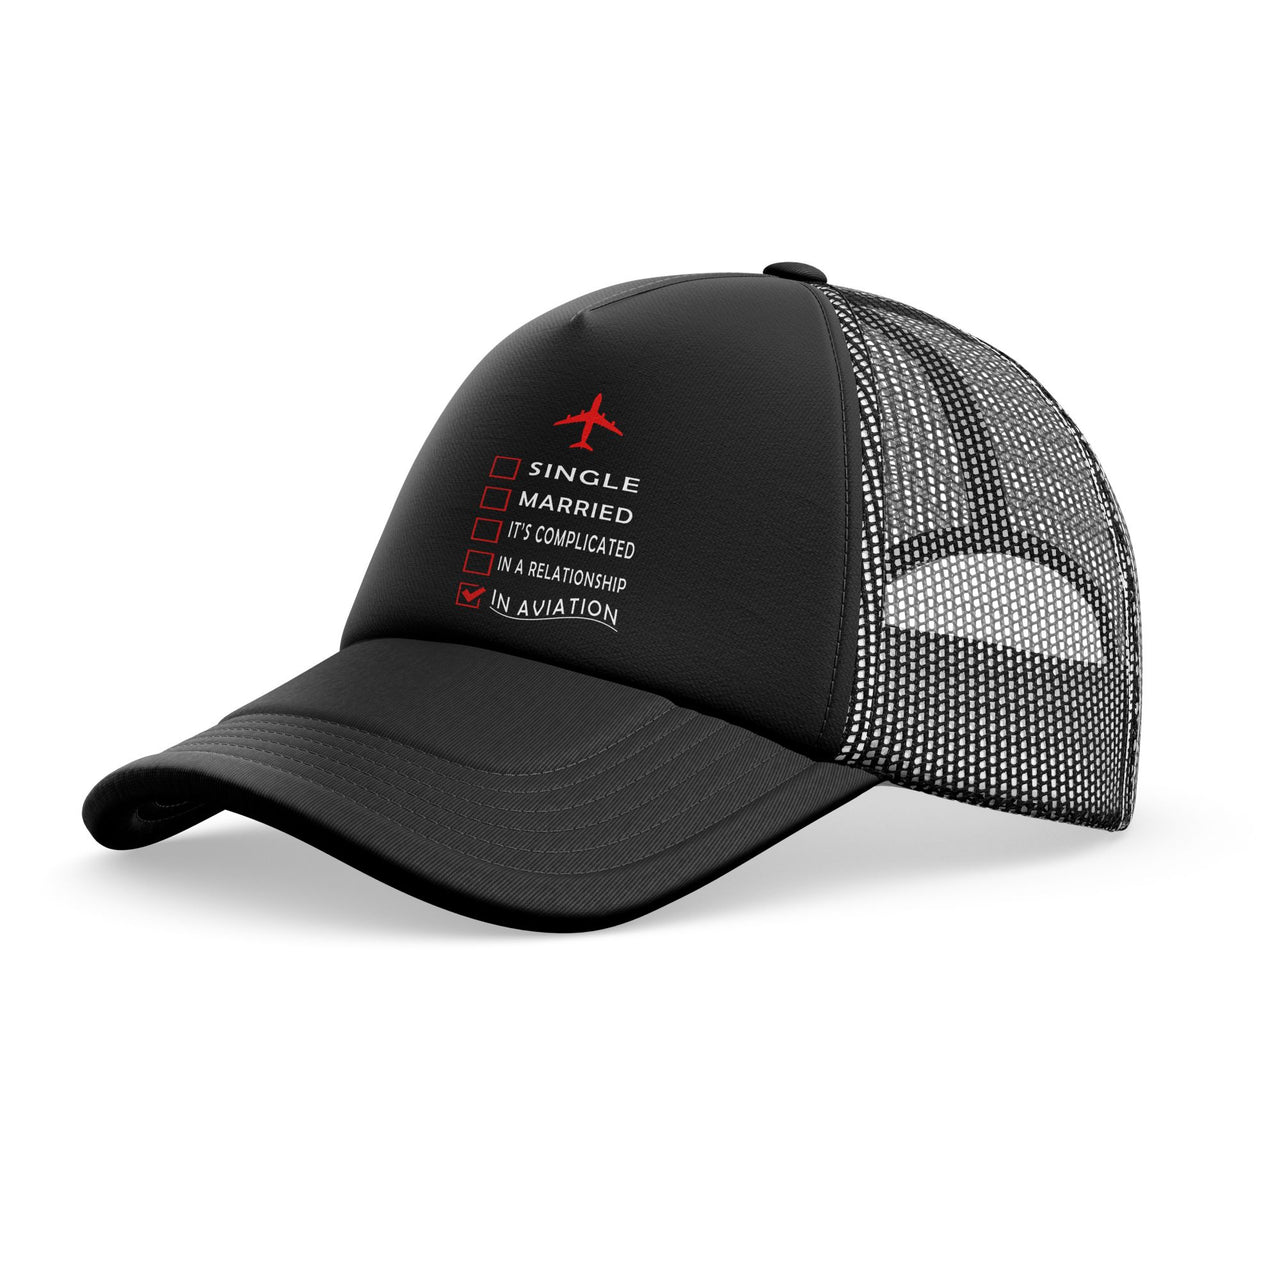 In Aviation Designed Trucker Caps & Hats